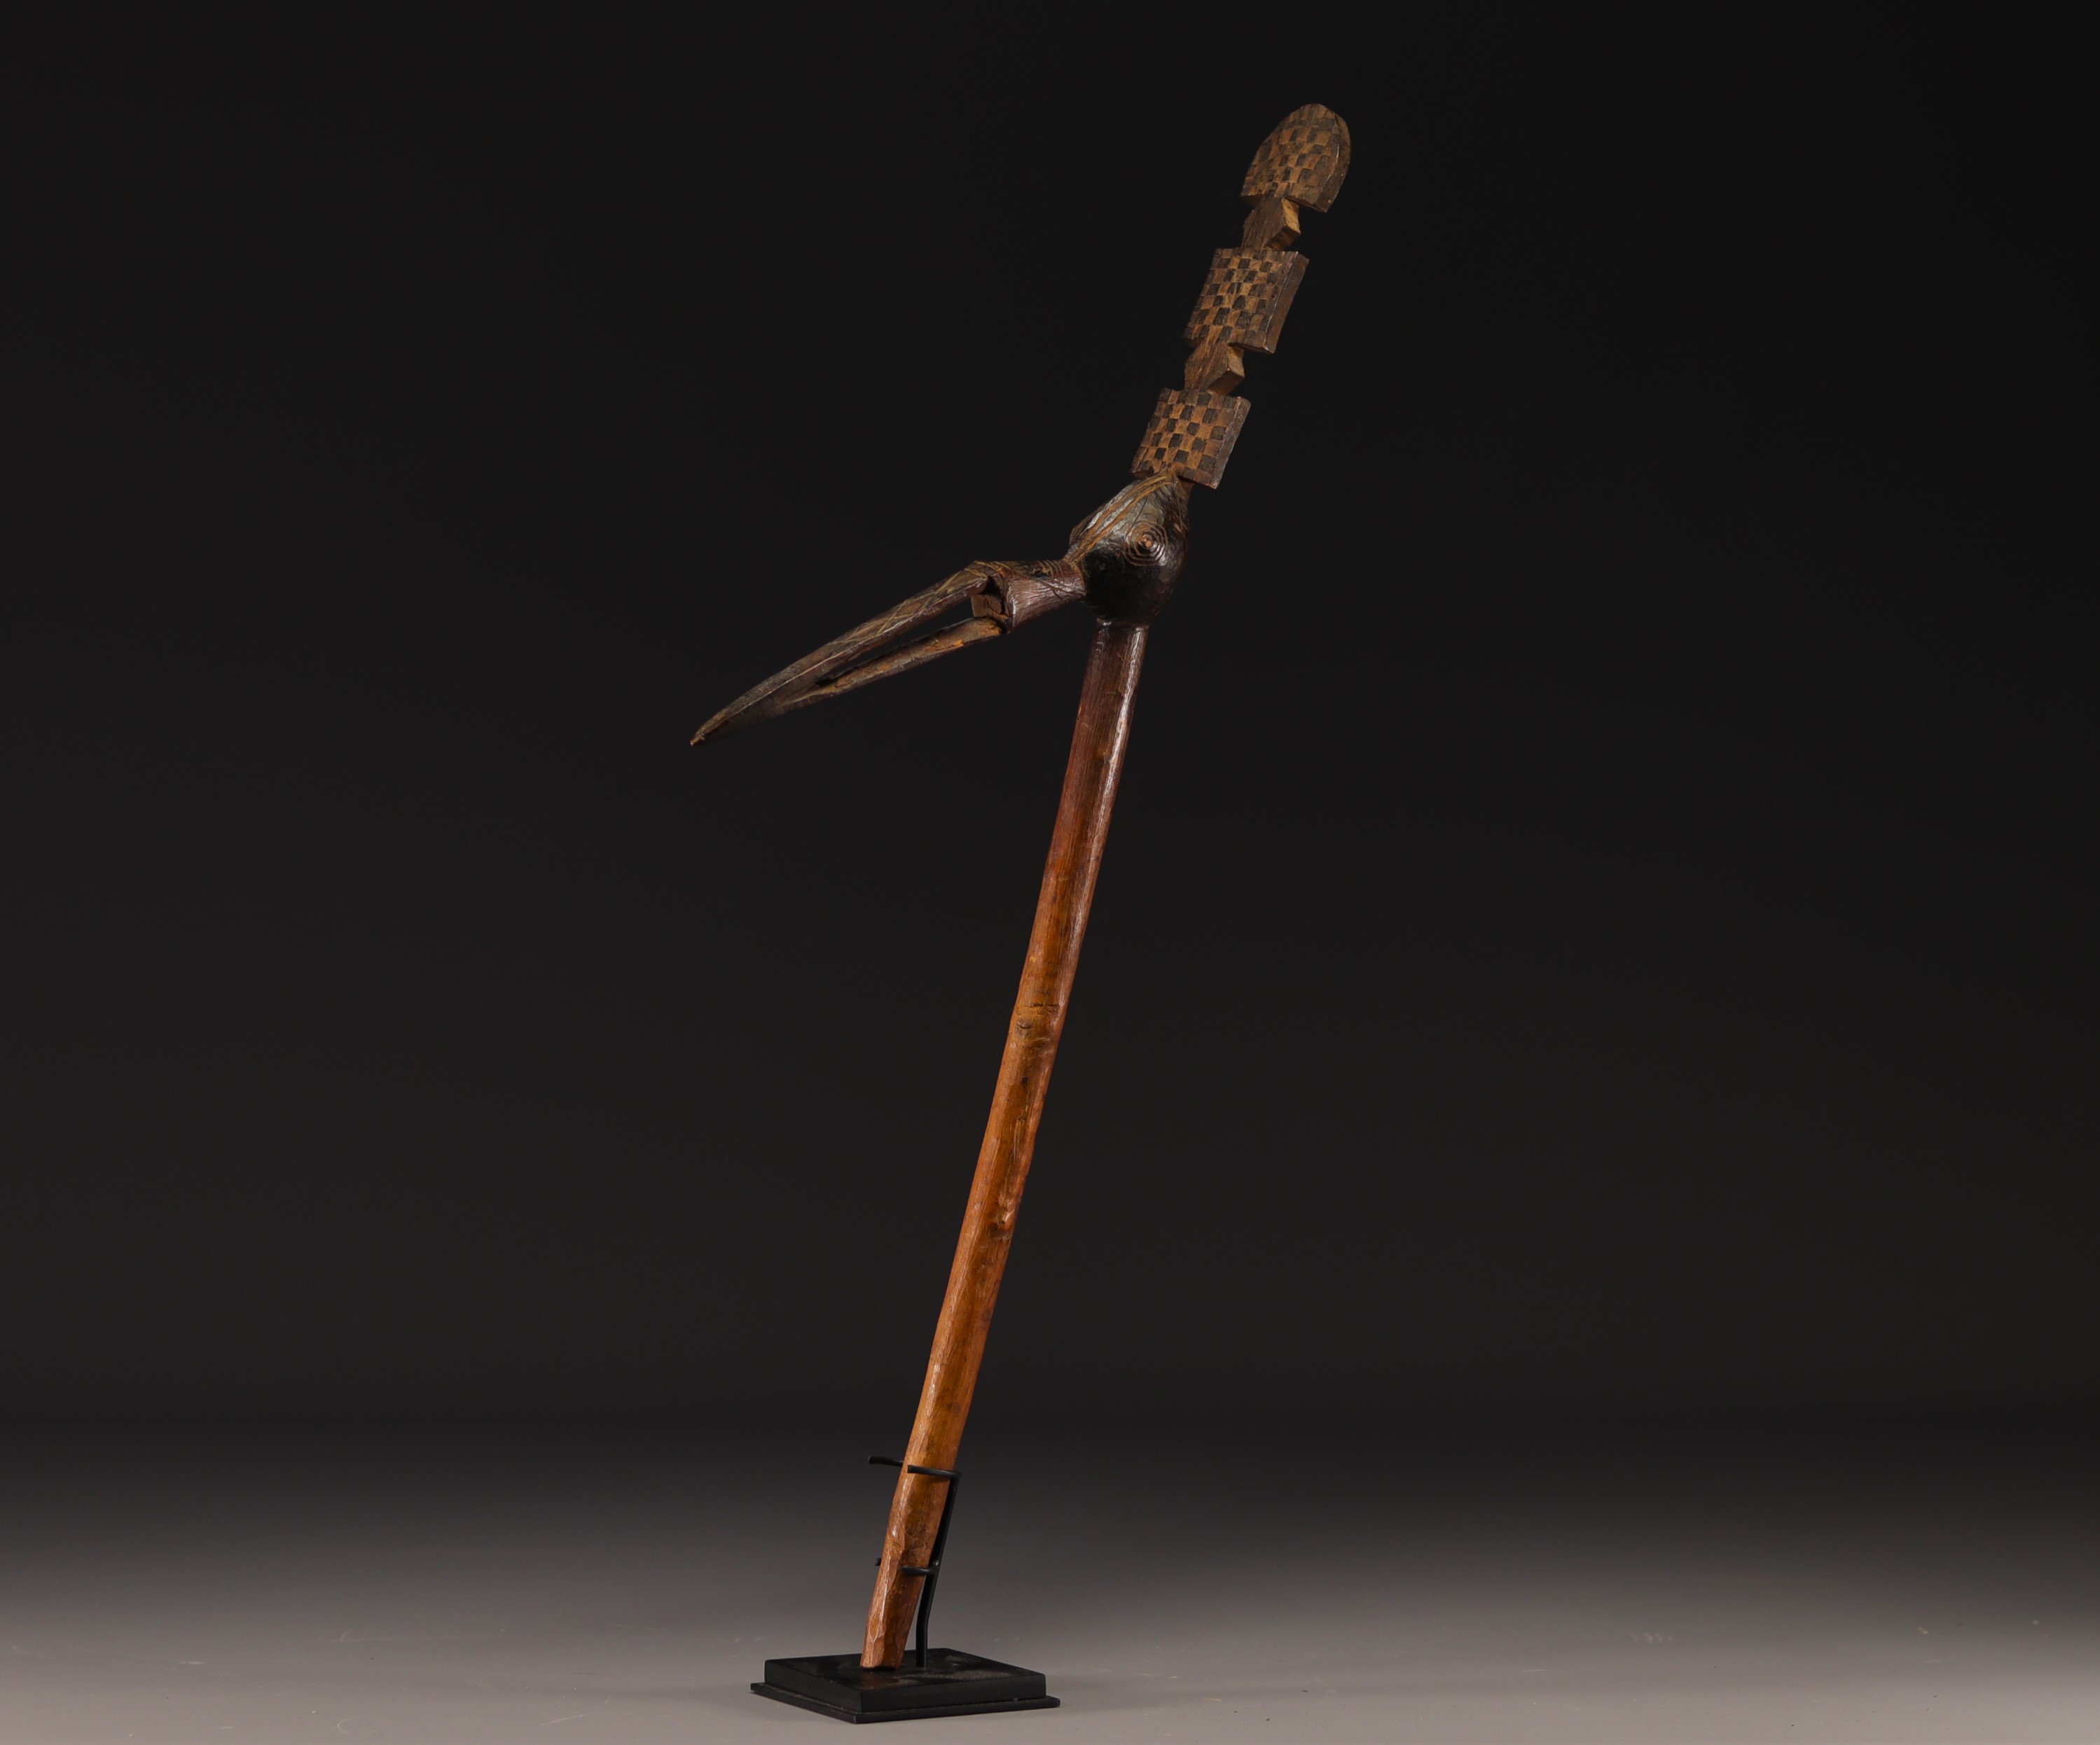 Prestige scepter - Ivory Coast - Image 2 of 2